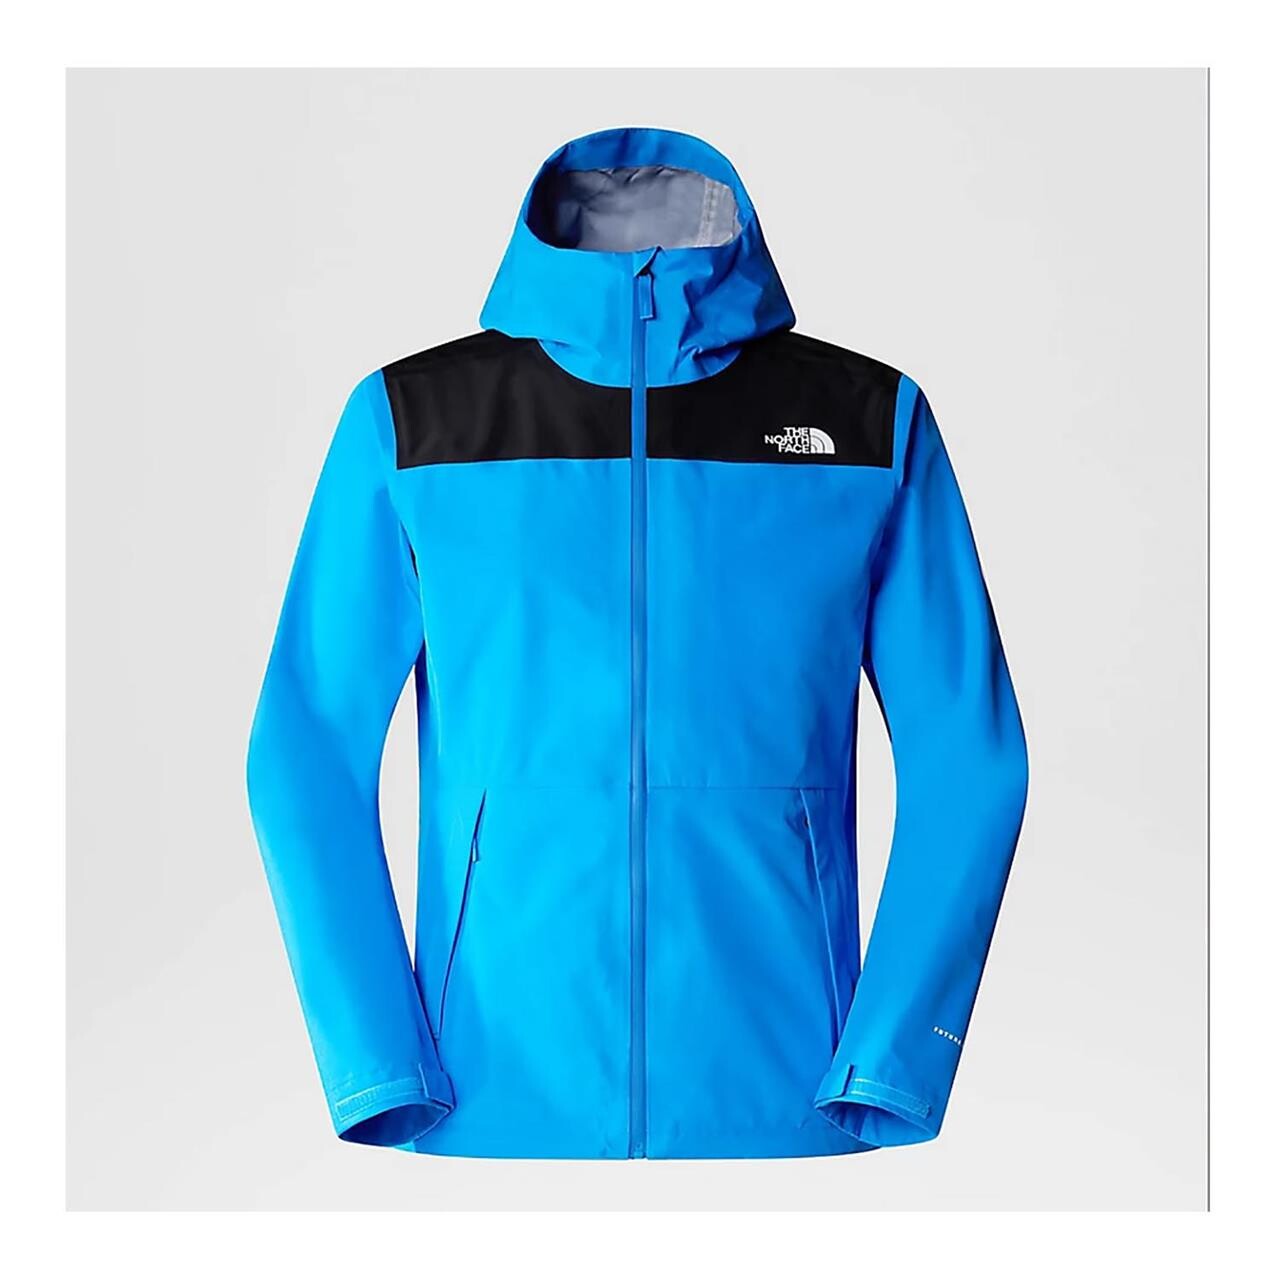 Se The North Face Mens Dryzzle Futurelight Jacket (Blå (OPTIC BLUE/TNF BLACK) Small) hos Friluftsland.dk